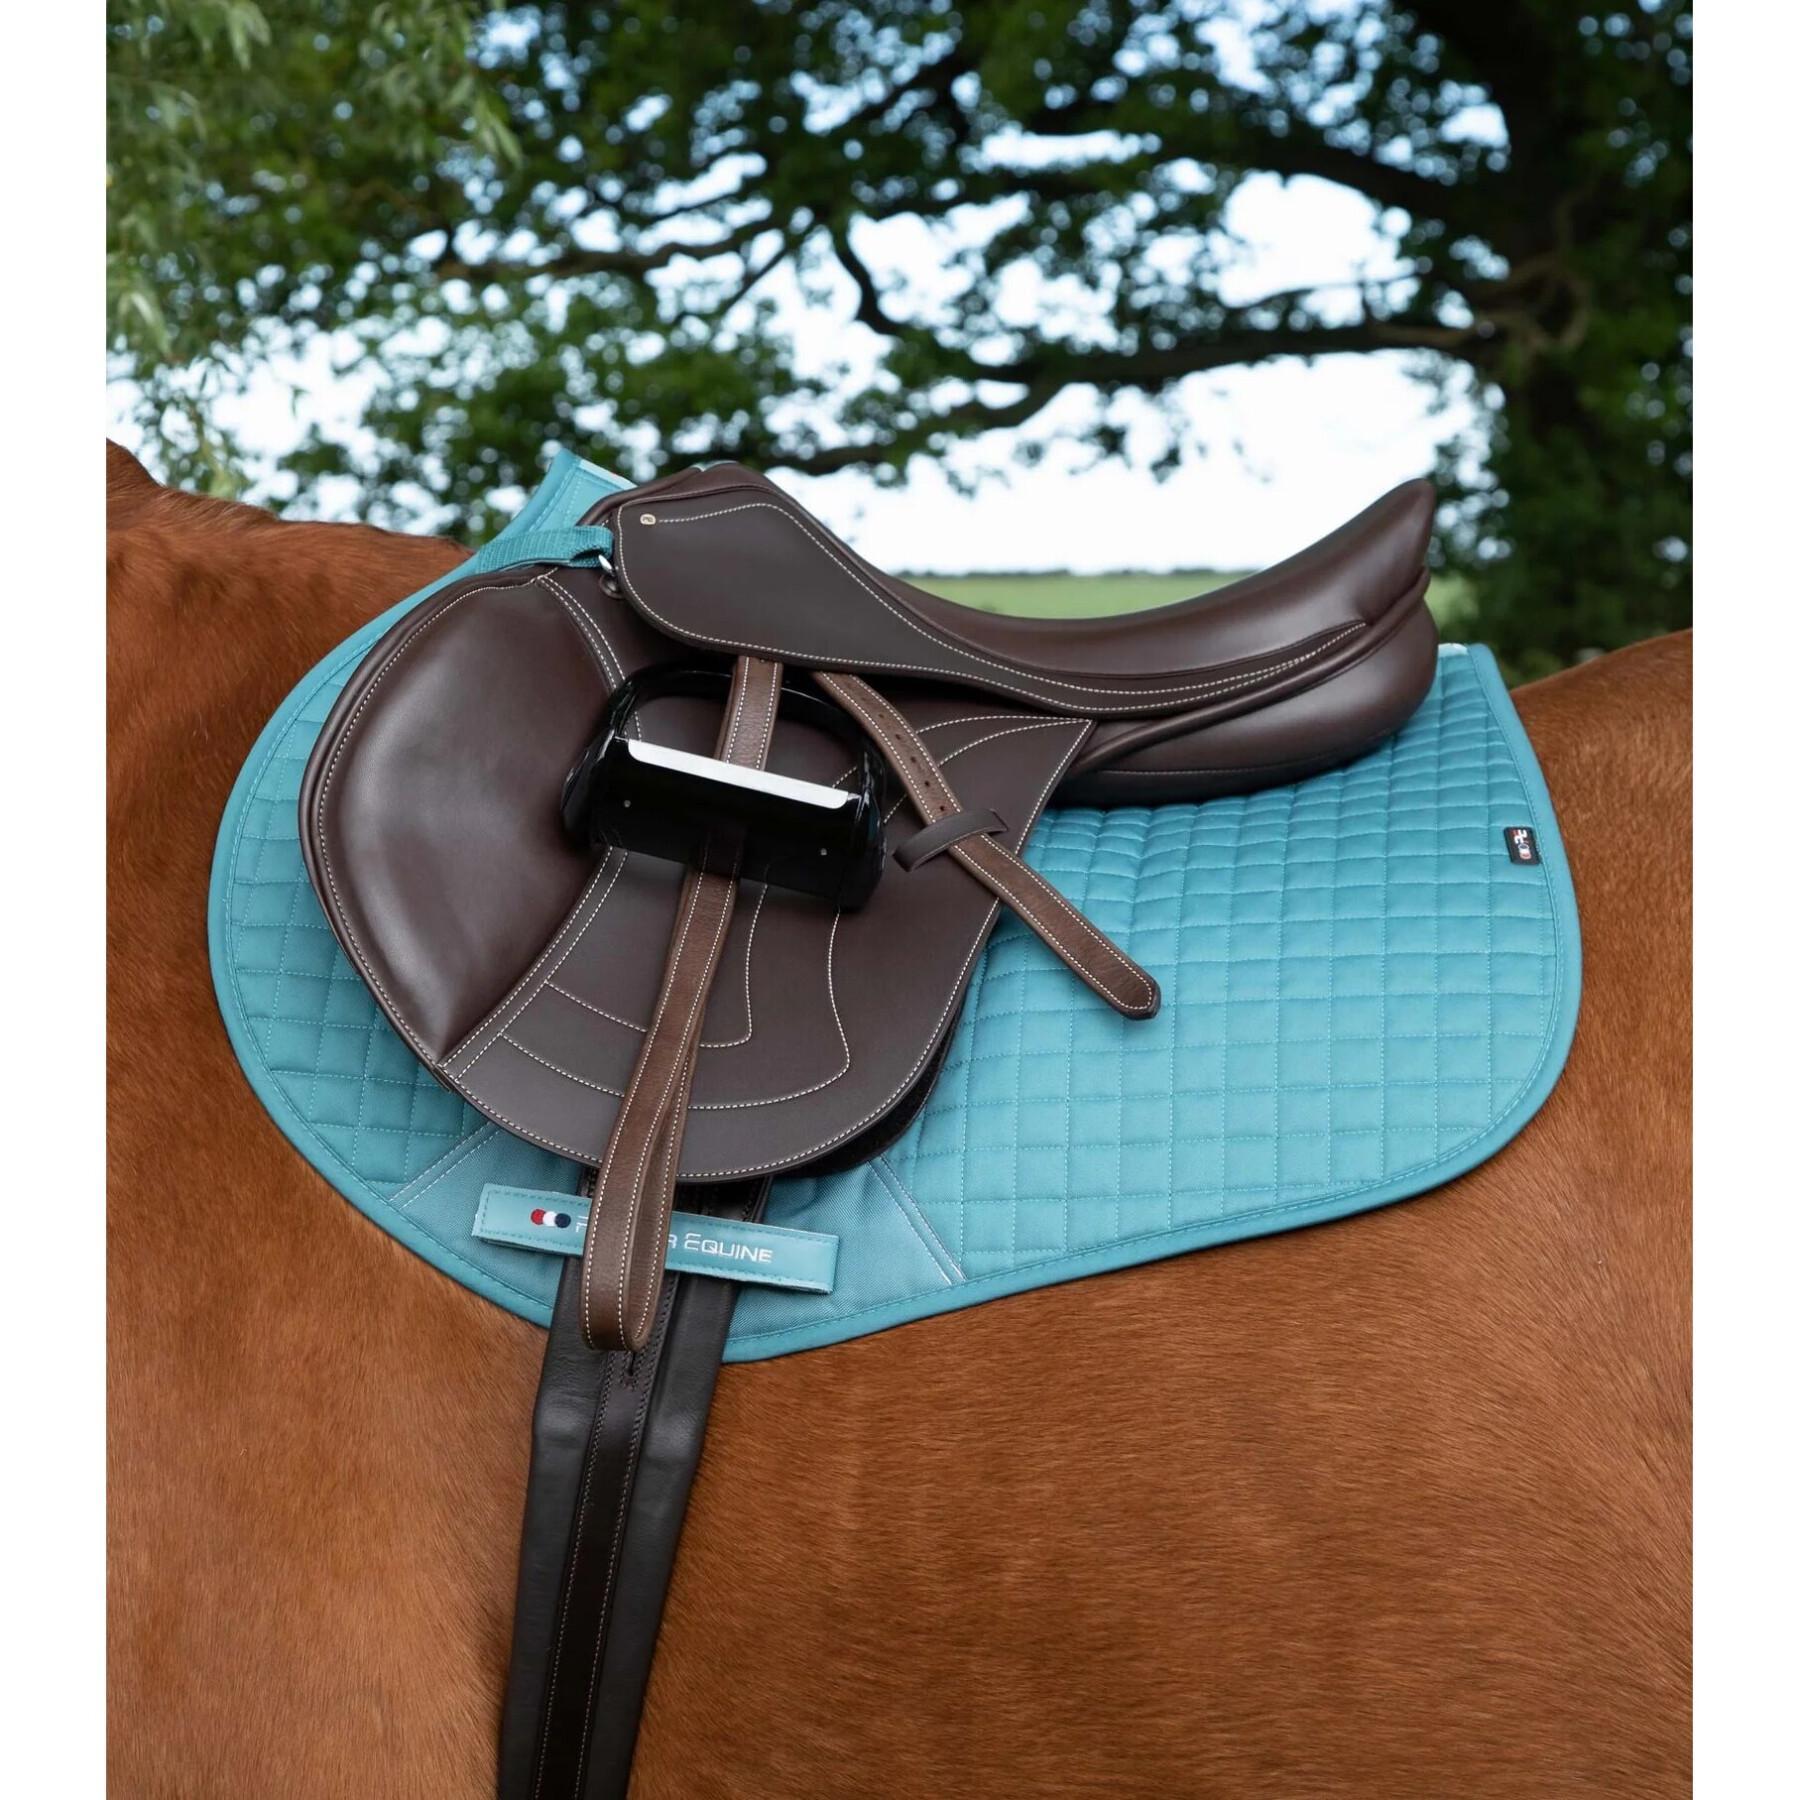 Saddle pad for horses in plain cotton Premier Equine Close Contact GP